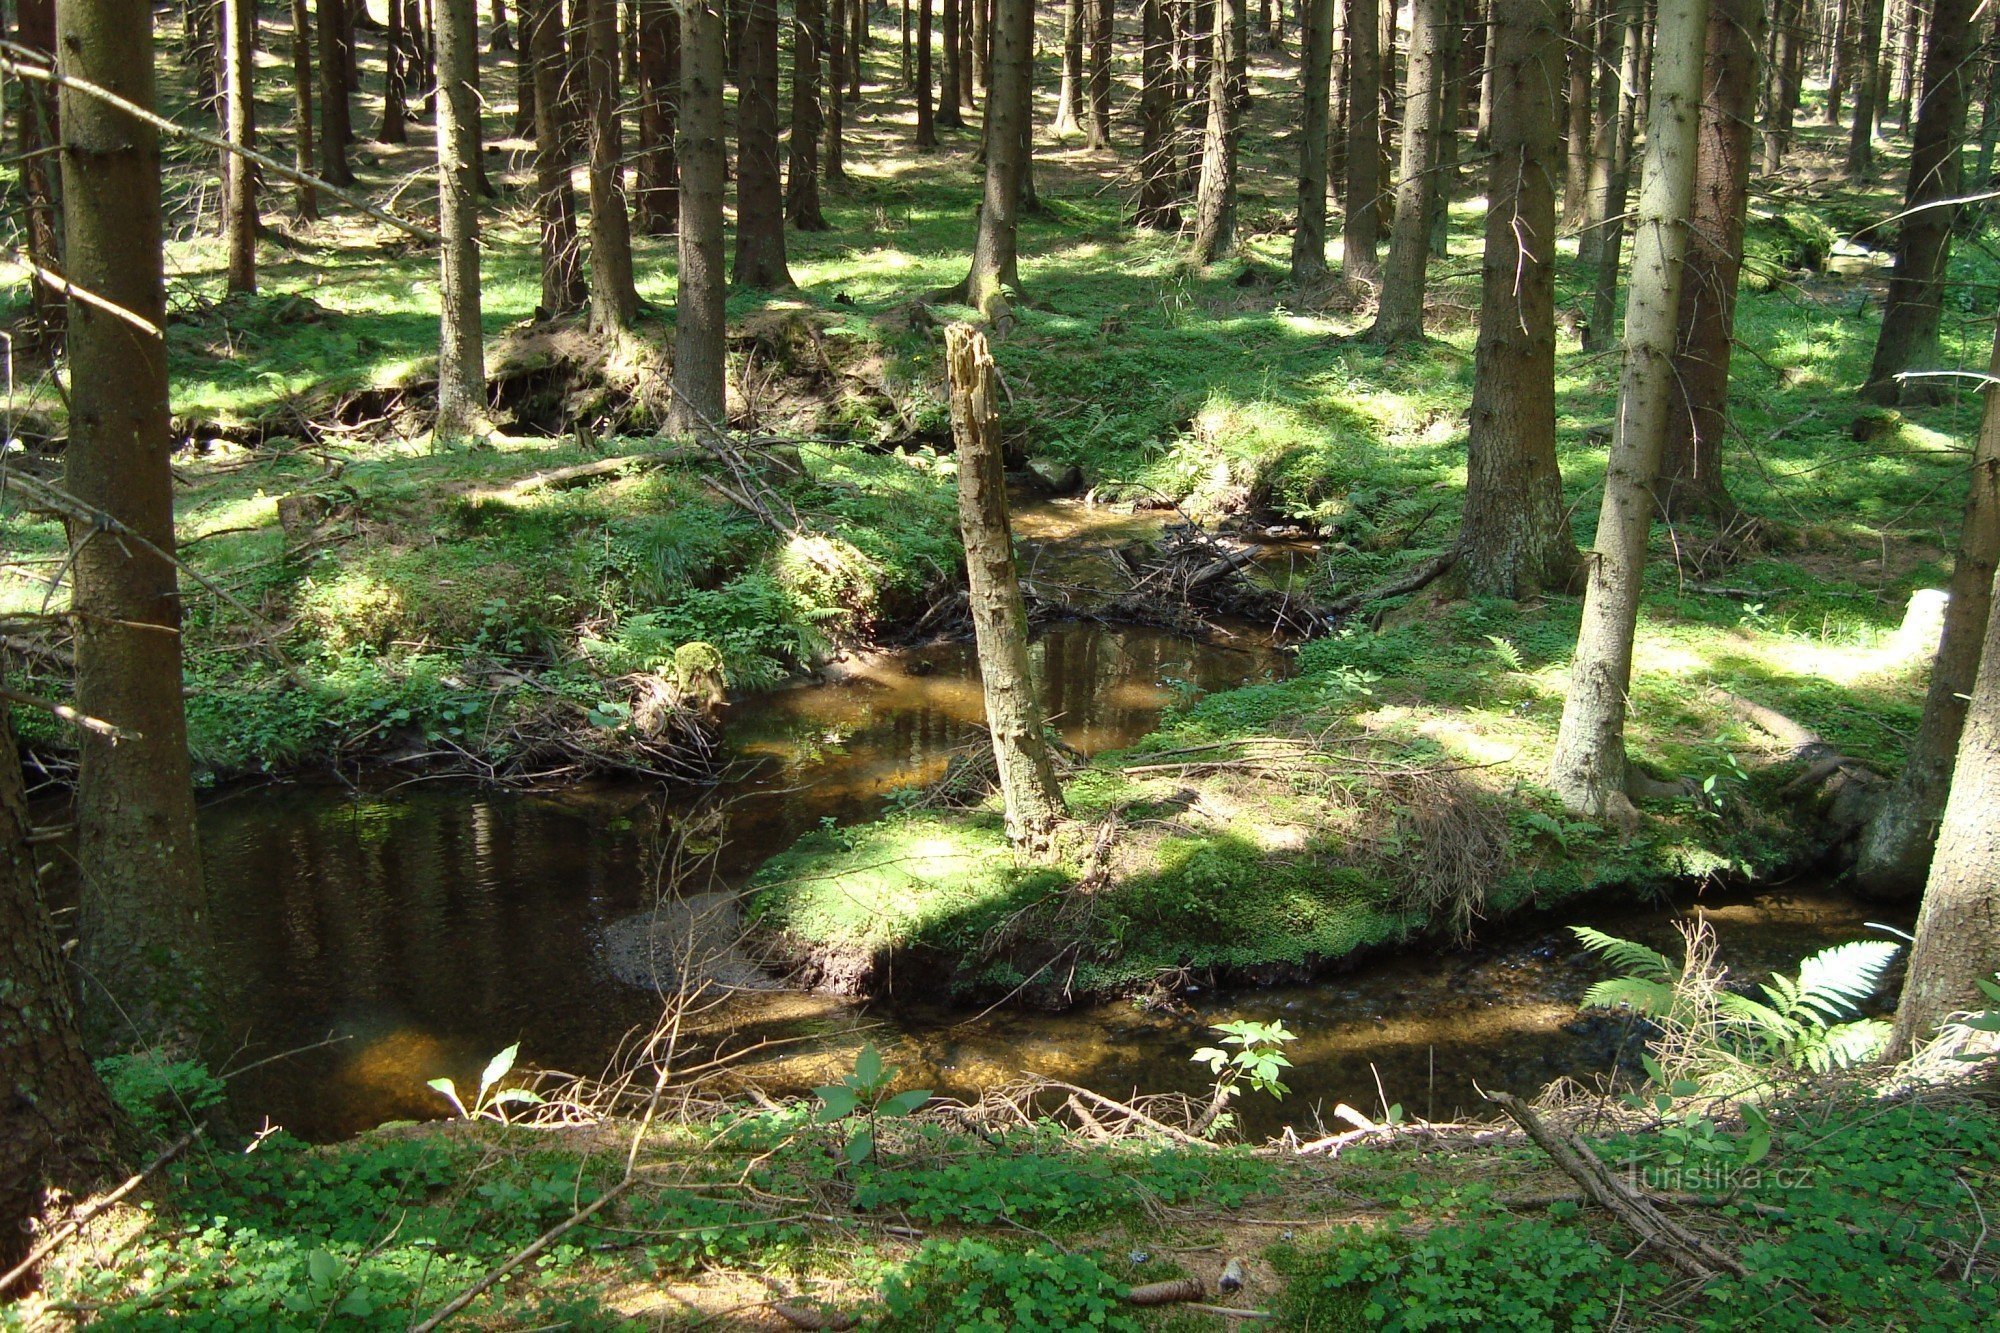 Huťský potok - a natural monument